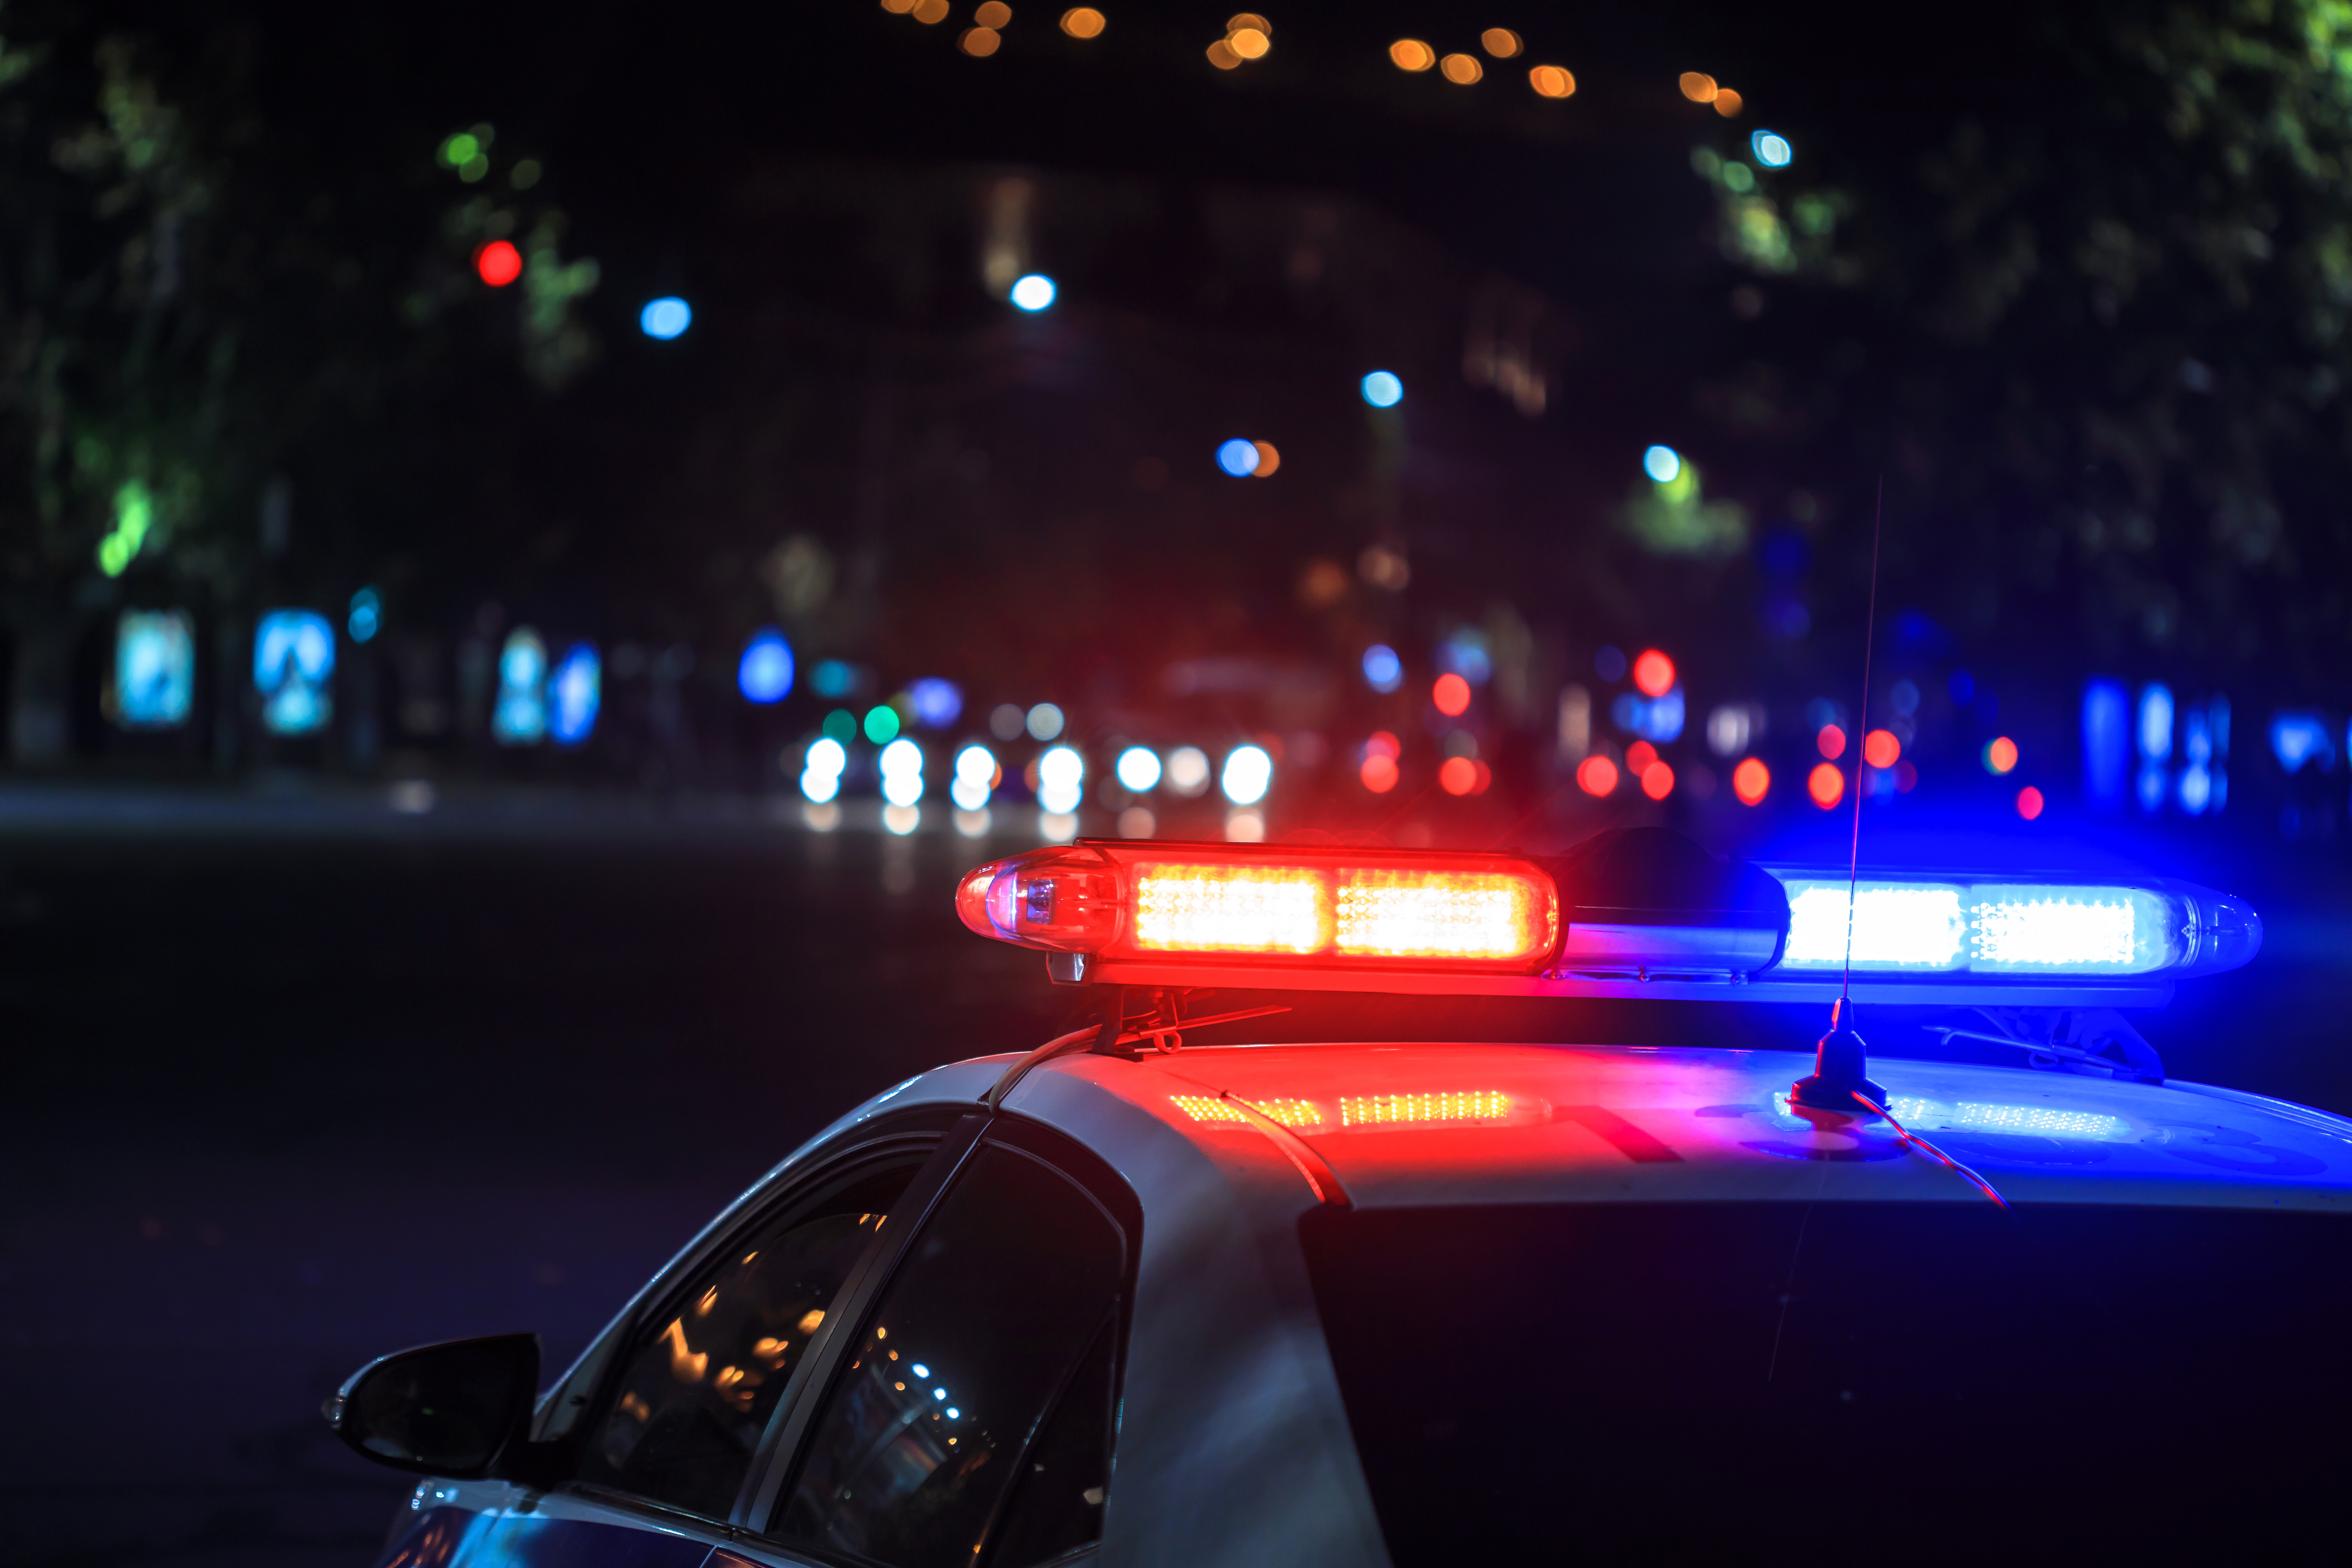 Police car | Source: Shutterstock